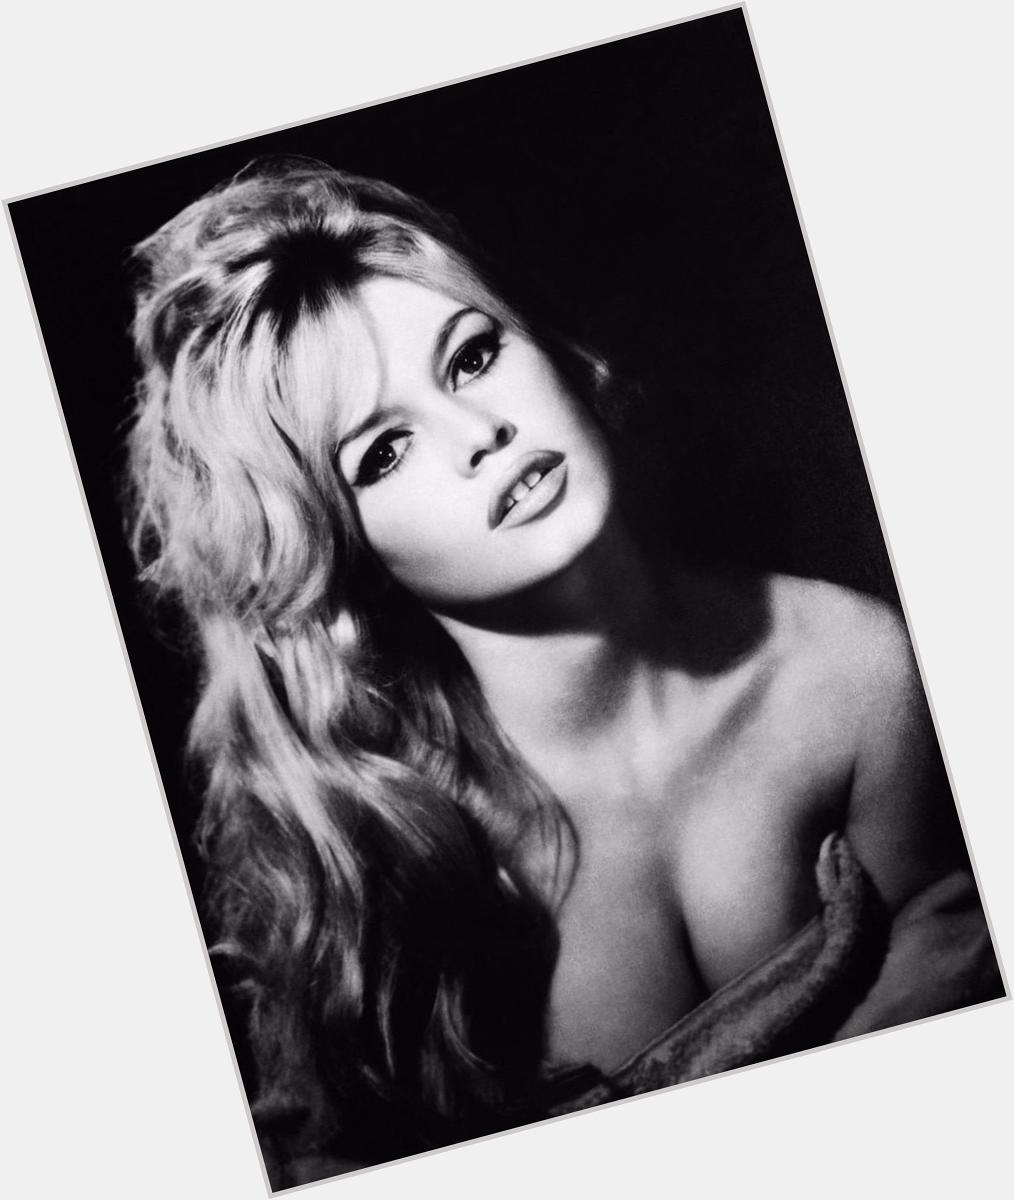 I\m a day late ... 
Happy Birthday Brigitte Bardot 